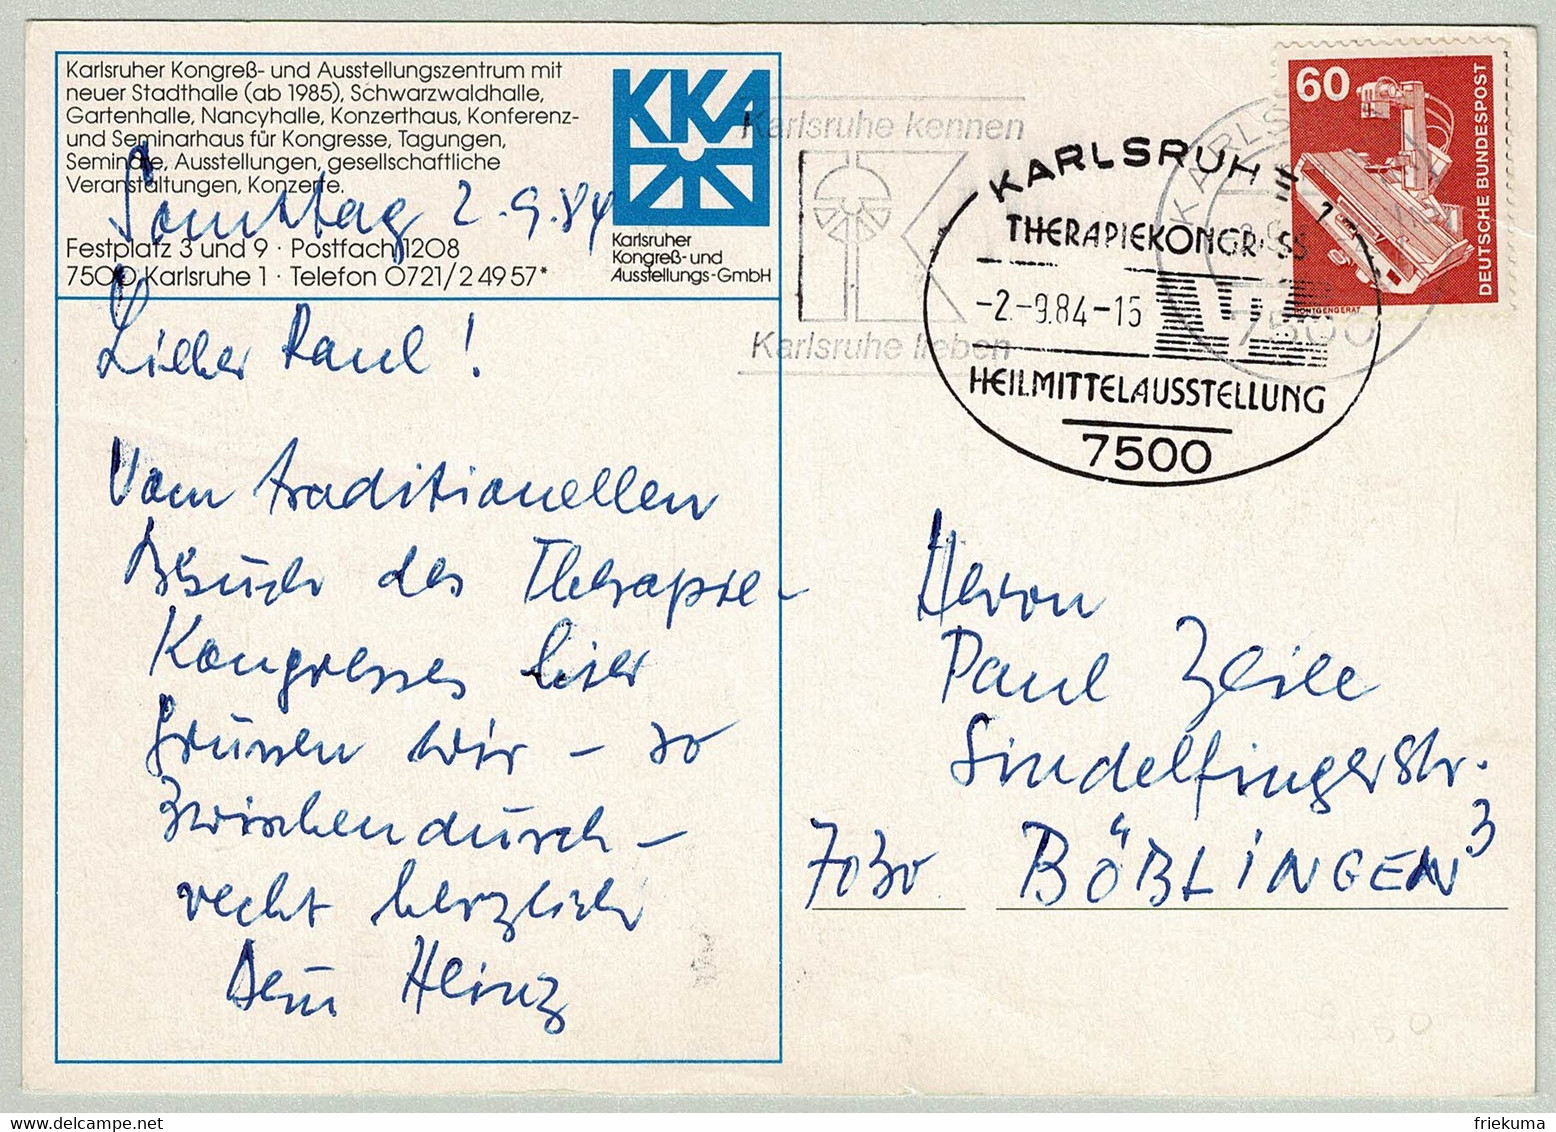 Deutsche Bundespost 1984, Postkarte Therapiekongress Heilmittel Ausstellung Karlsruhe - Böblingen - Pharmacy